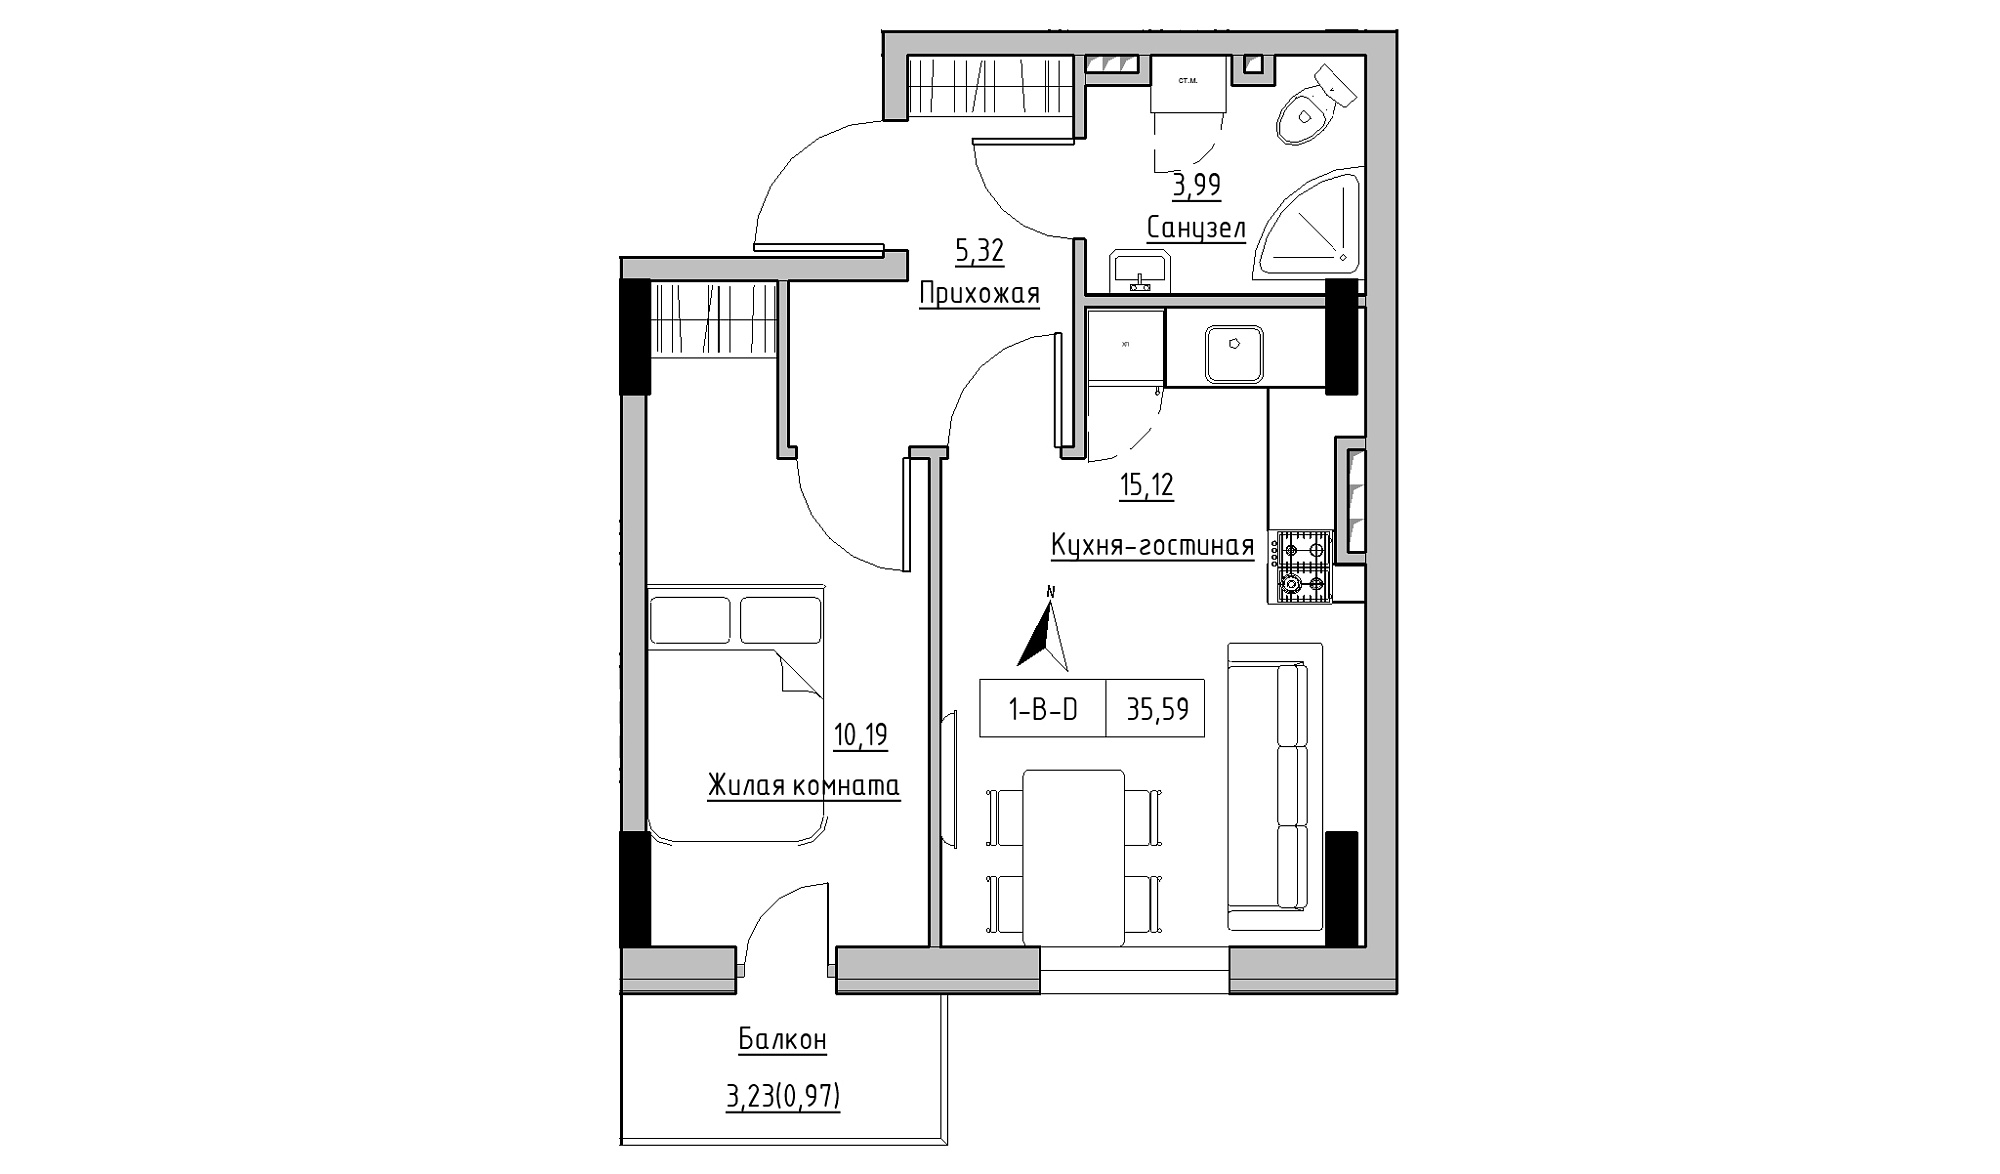 Planning 1-rm flats area 35.59m2, KS-025-03/0011.